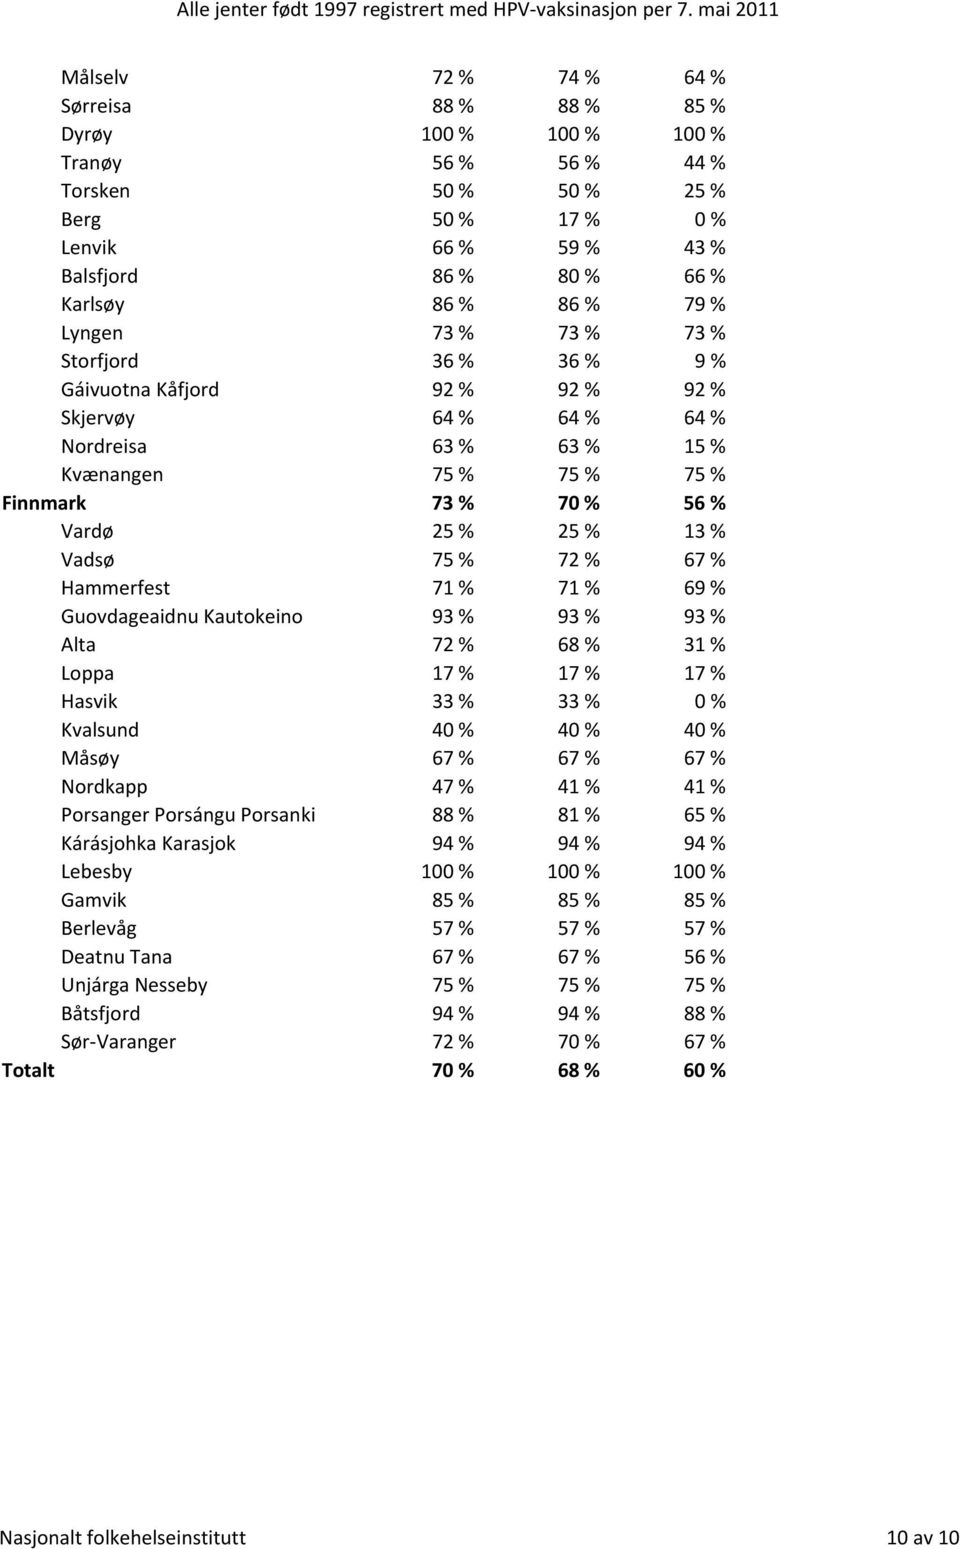 13 % Vadsø 75 % 72 % 67 % Hammerfest 71 % 71 % 69 % Guovdageaidnu Kautokeino 93 % 93 % 93 % Alta 72 % 68 % 31 % Loppa 17 % 17 % 17 % Hasvik 33 % 33 % 0 % Kvalsund 40 % 40 % 40 % Måsøy 67 % 67 % 67 %